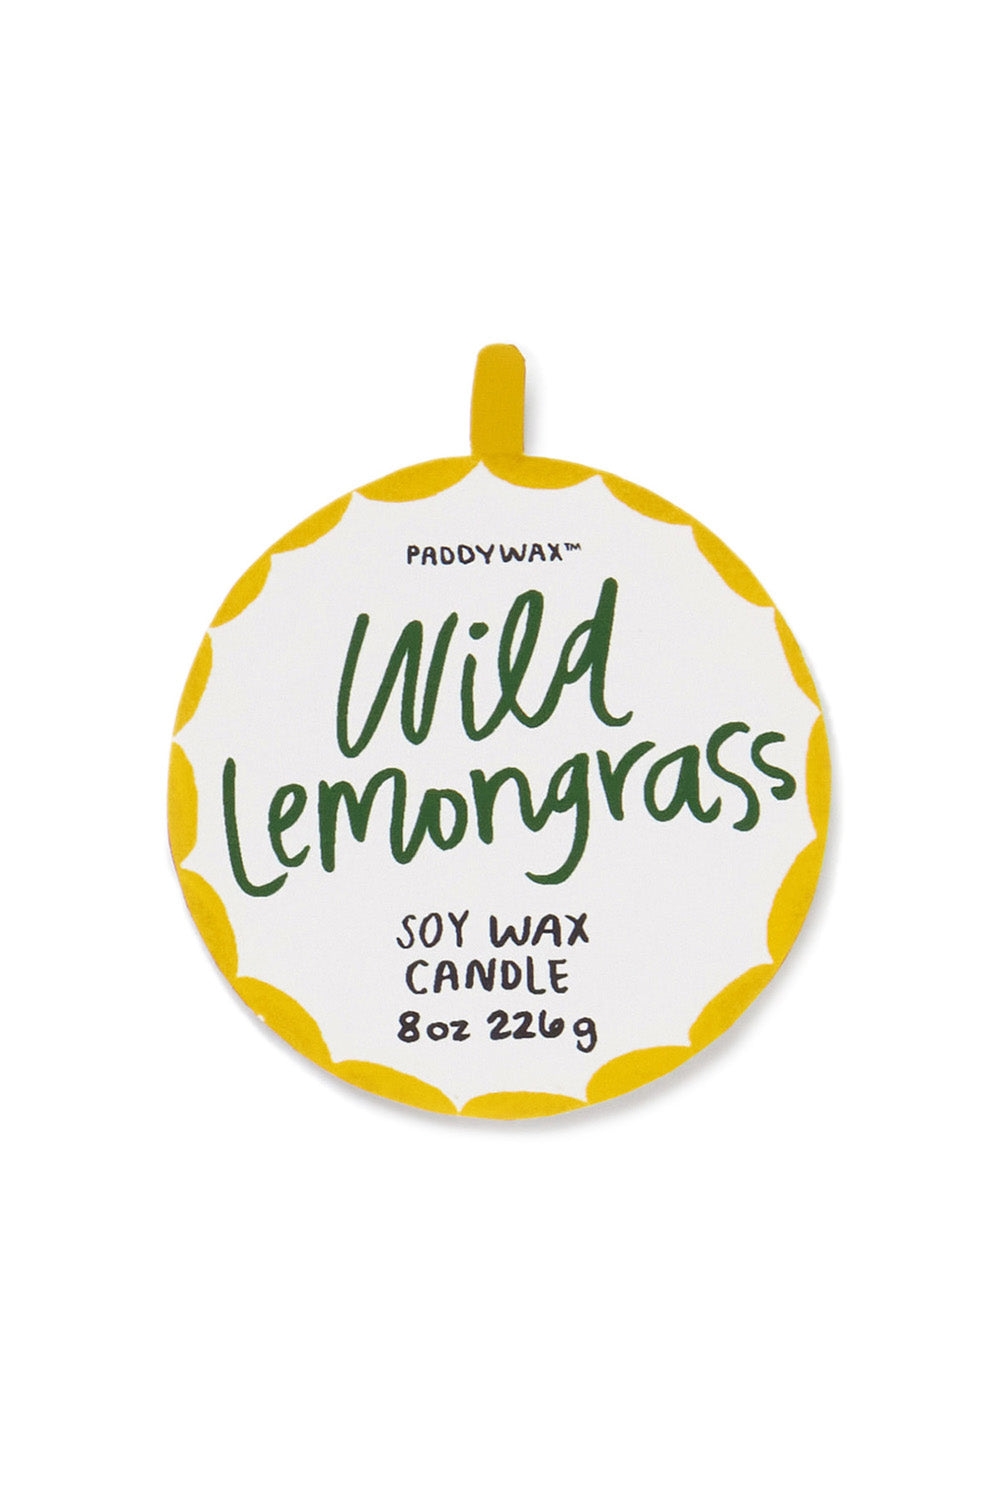 Paddywax - A Dopo 8oz - Wild Lemongrass - Cover